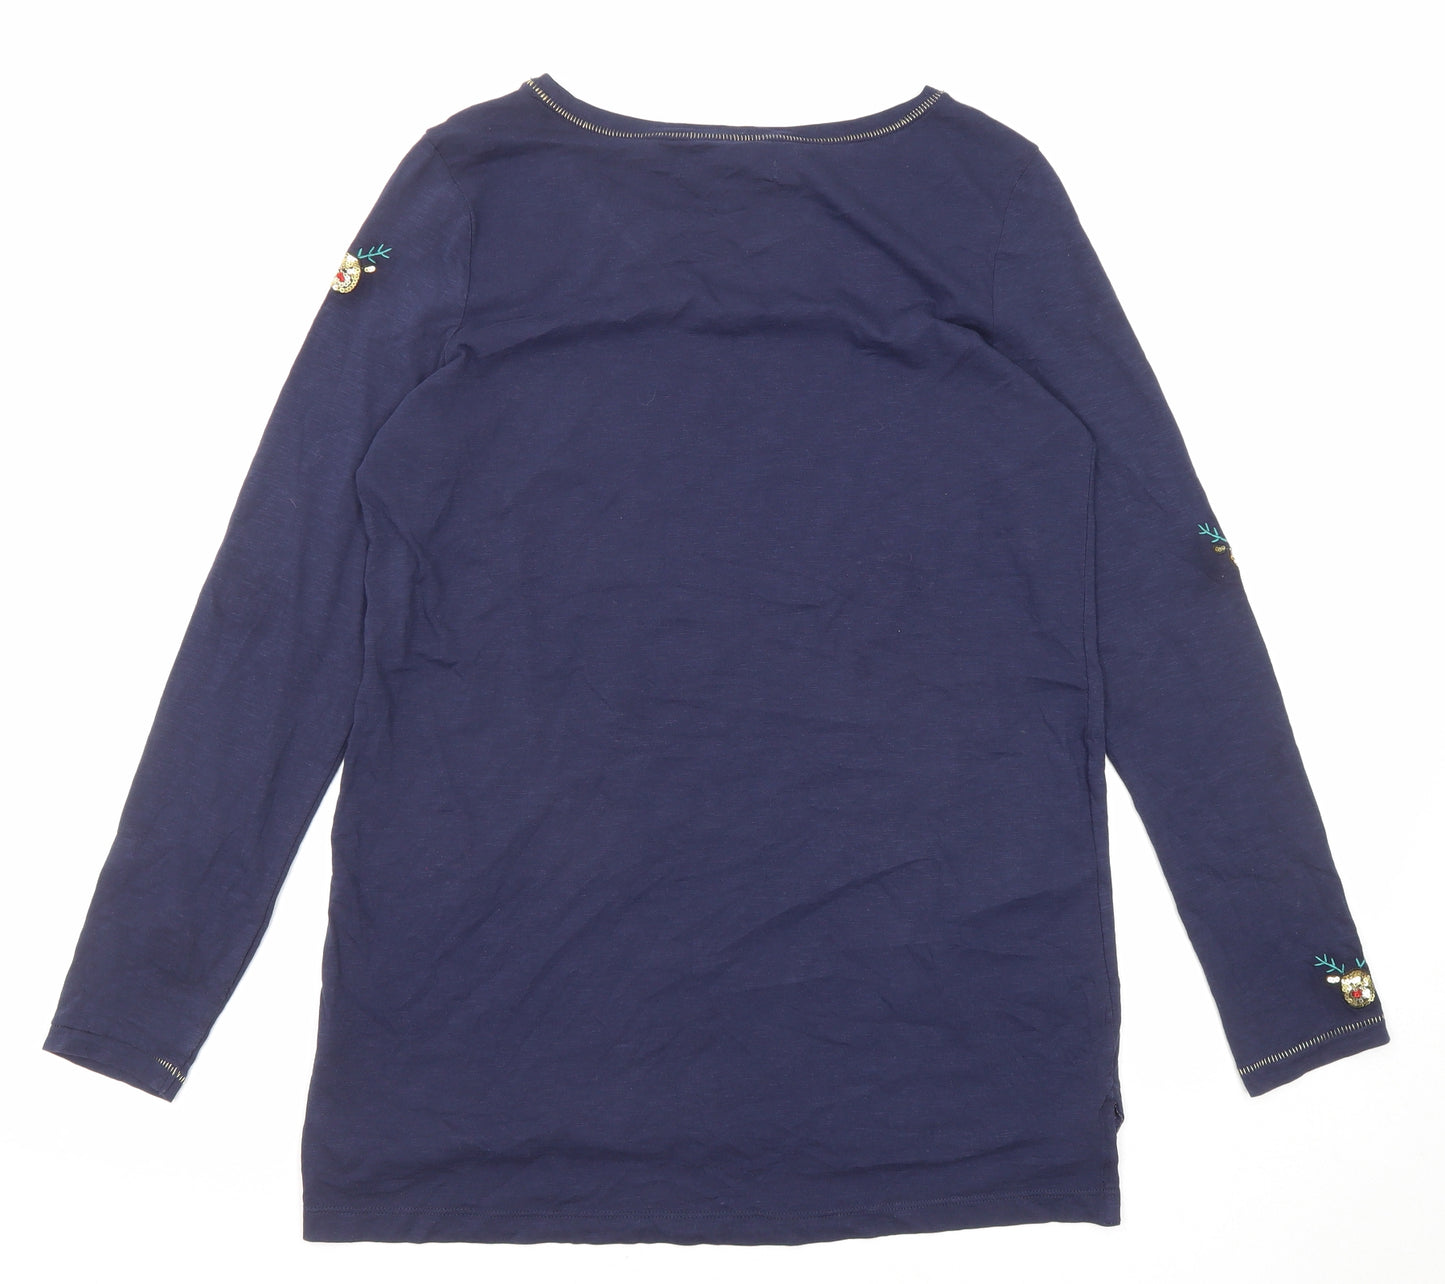 NEXT Womens Blue Cotton Basic T-Shirt Size 12 Round Neck - Reindeer Christmas